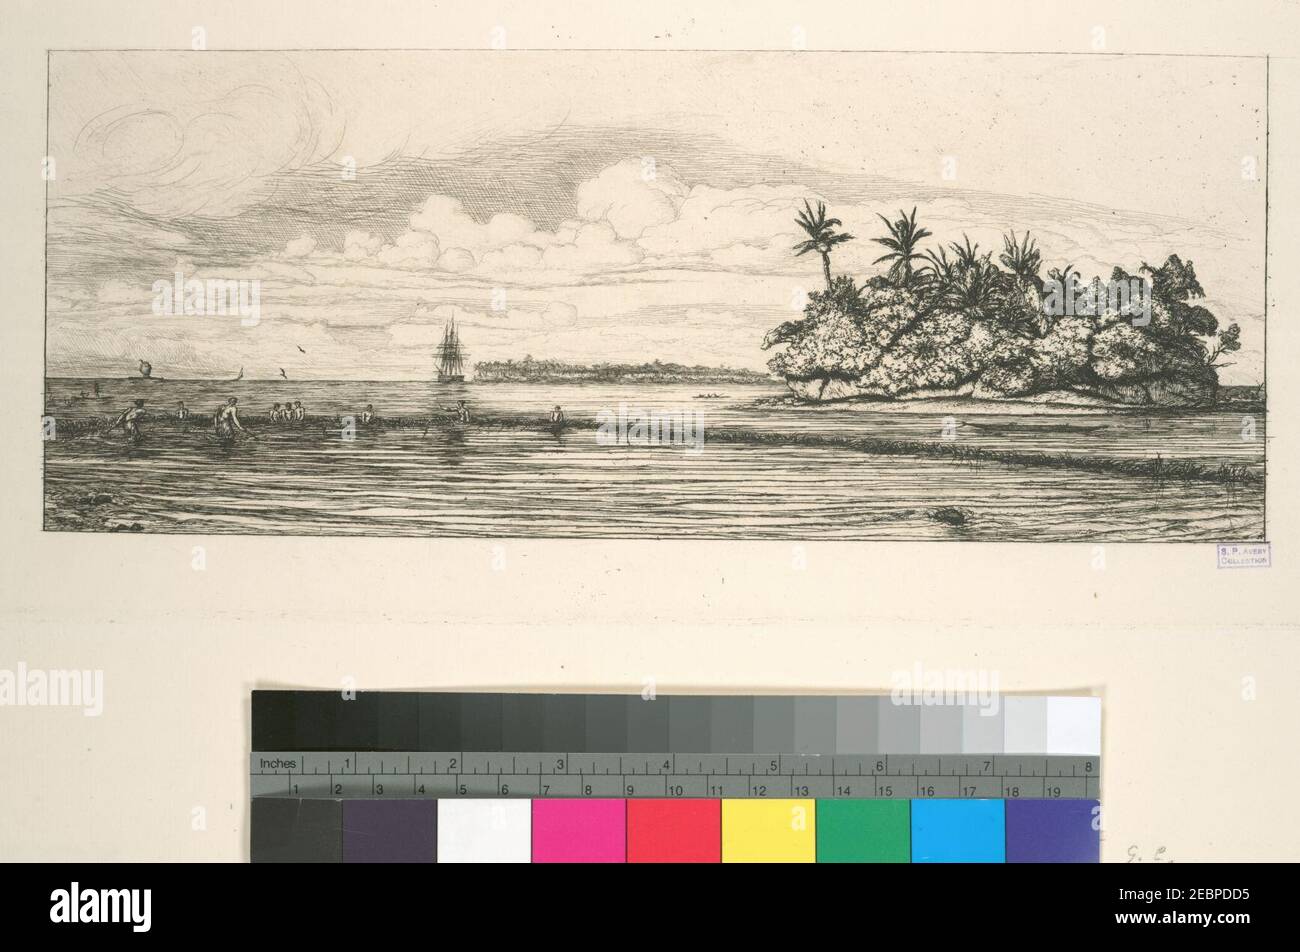 Océanie, îlots à Uvea (Wallis), pêche aux palmes Stockfoto